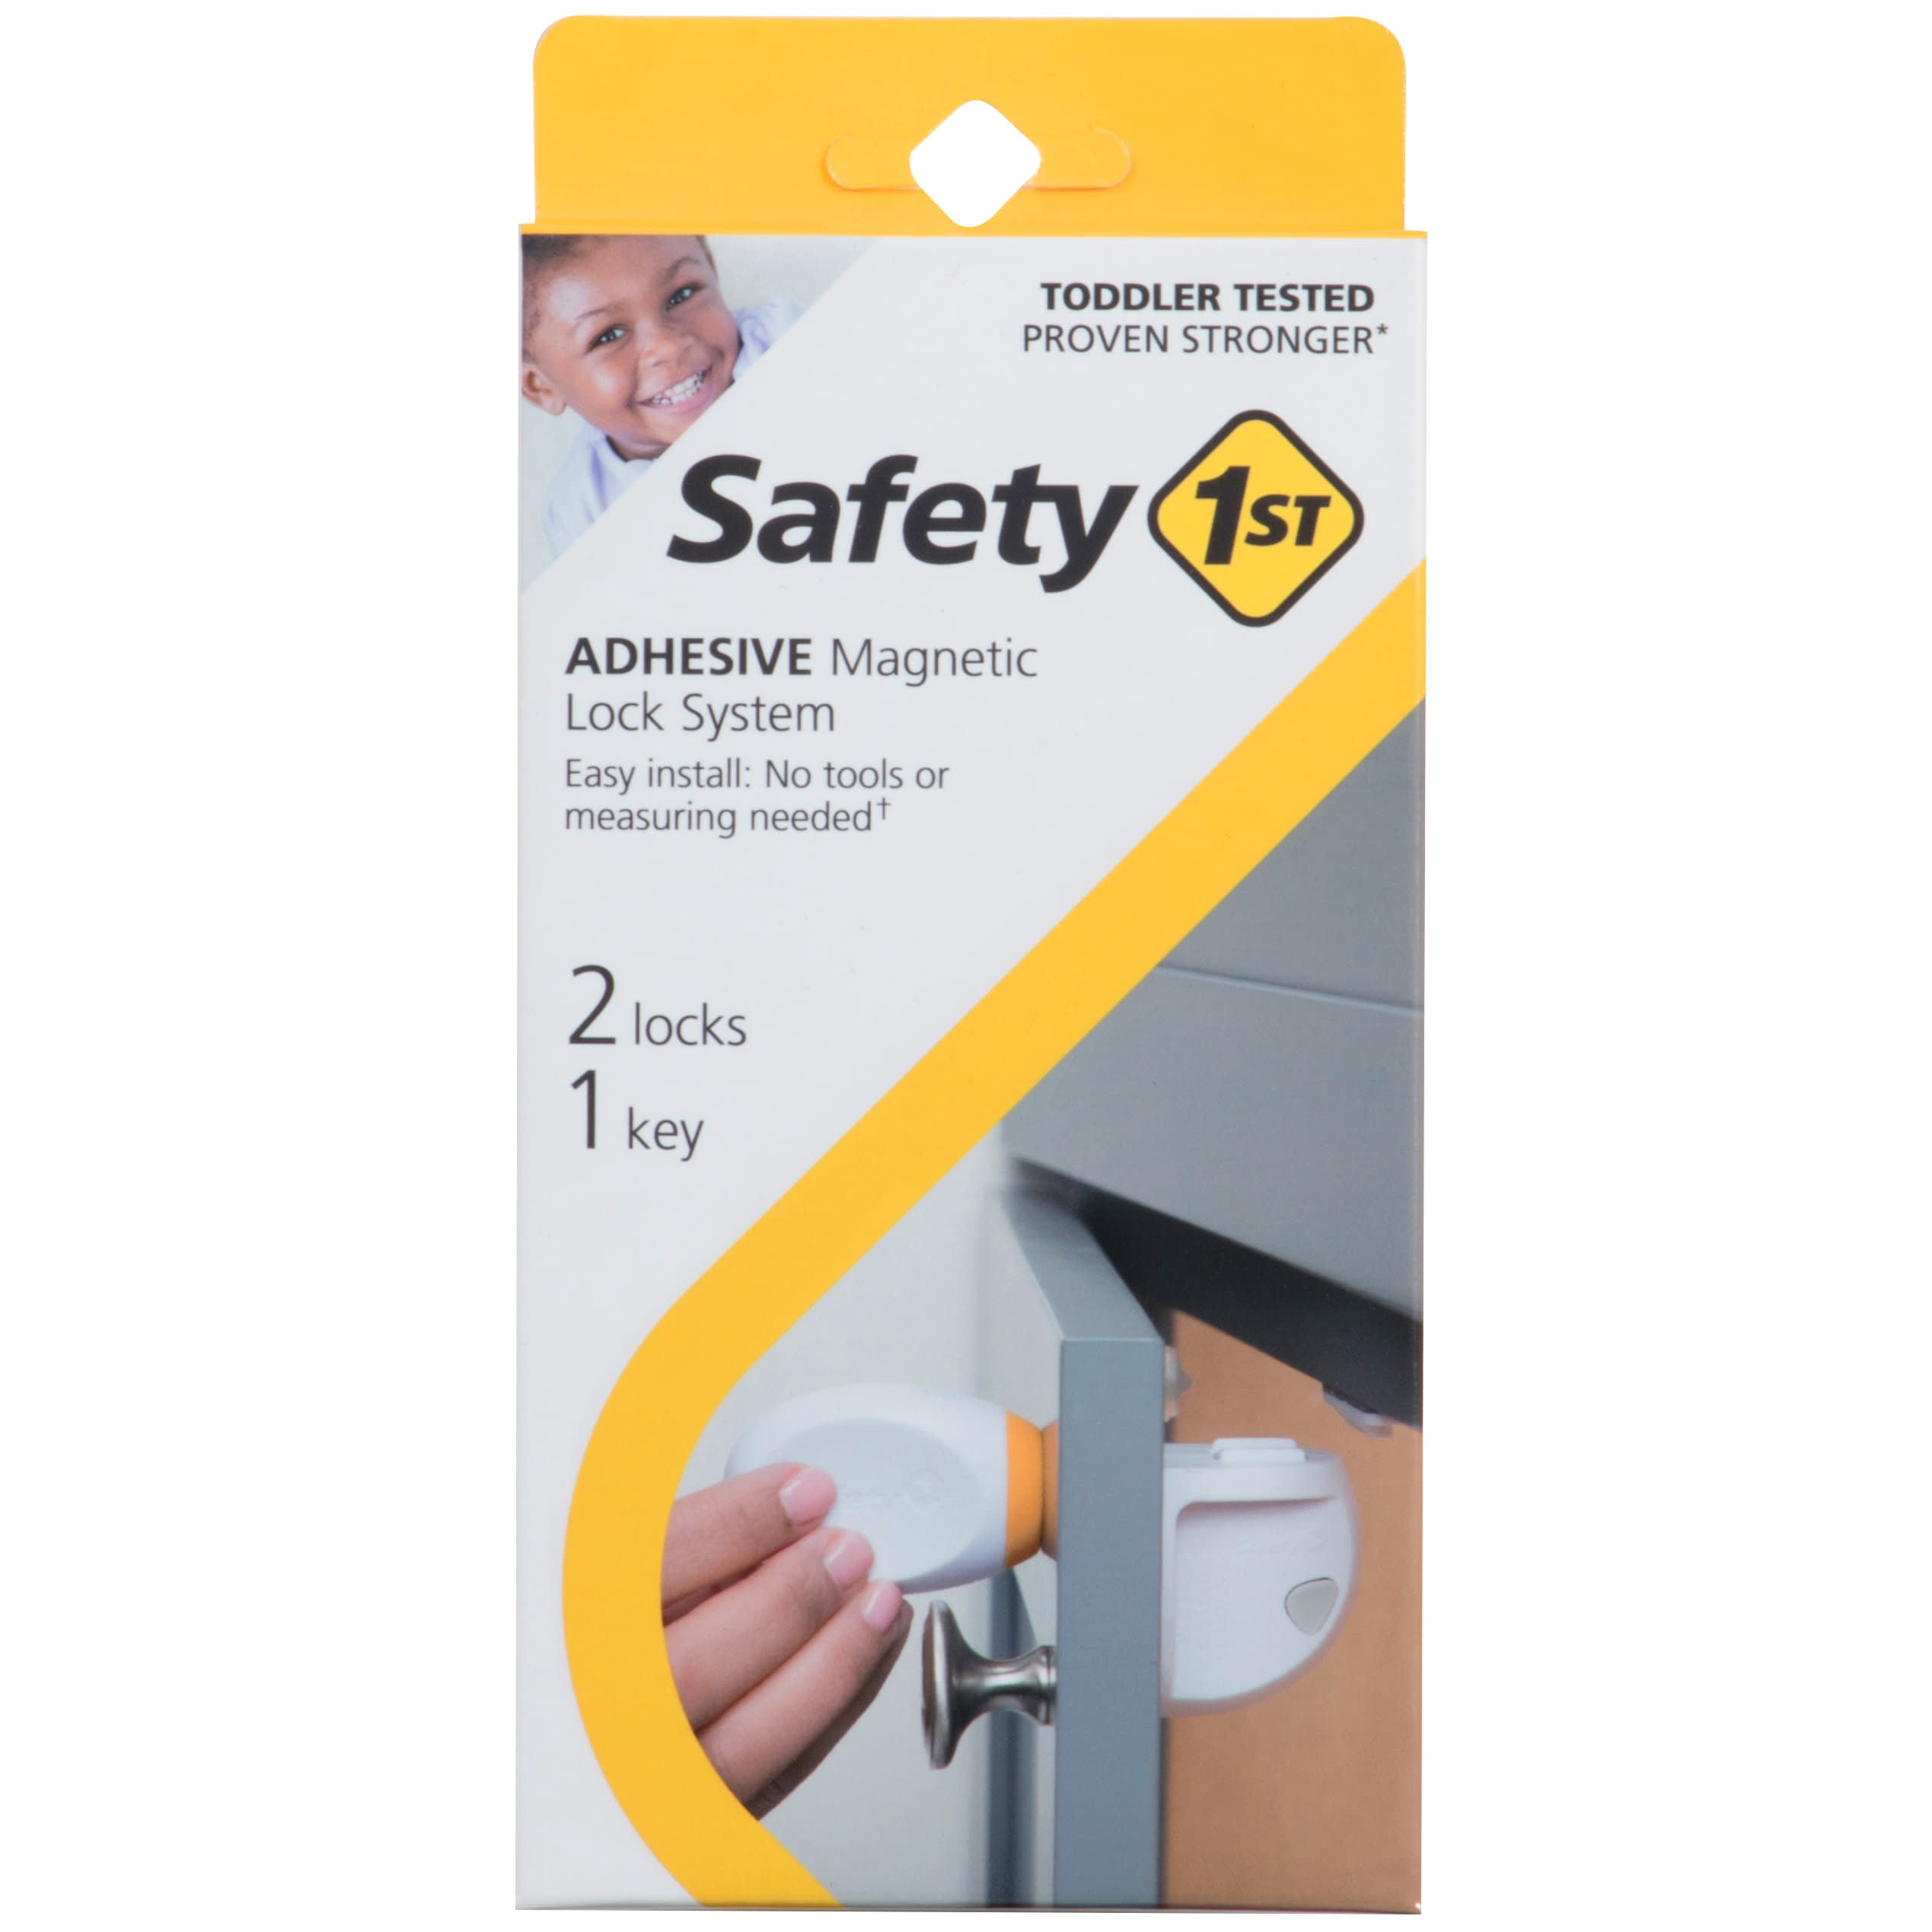 Safety 1st Plastic Adhesive Magnetic Lock System (4-Lock Set) - Dazey's  Supply